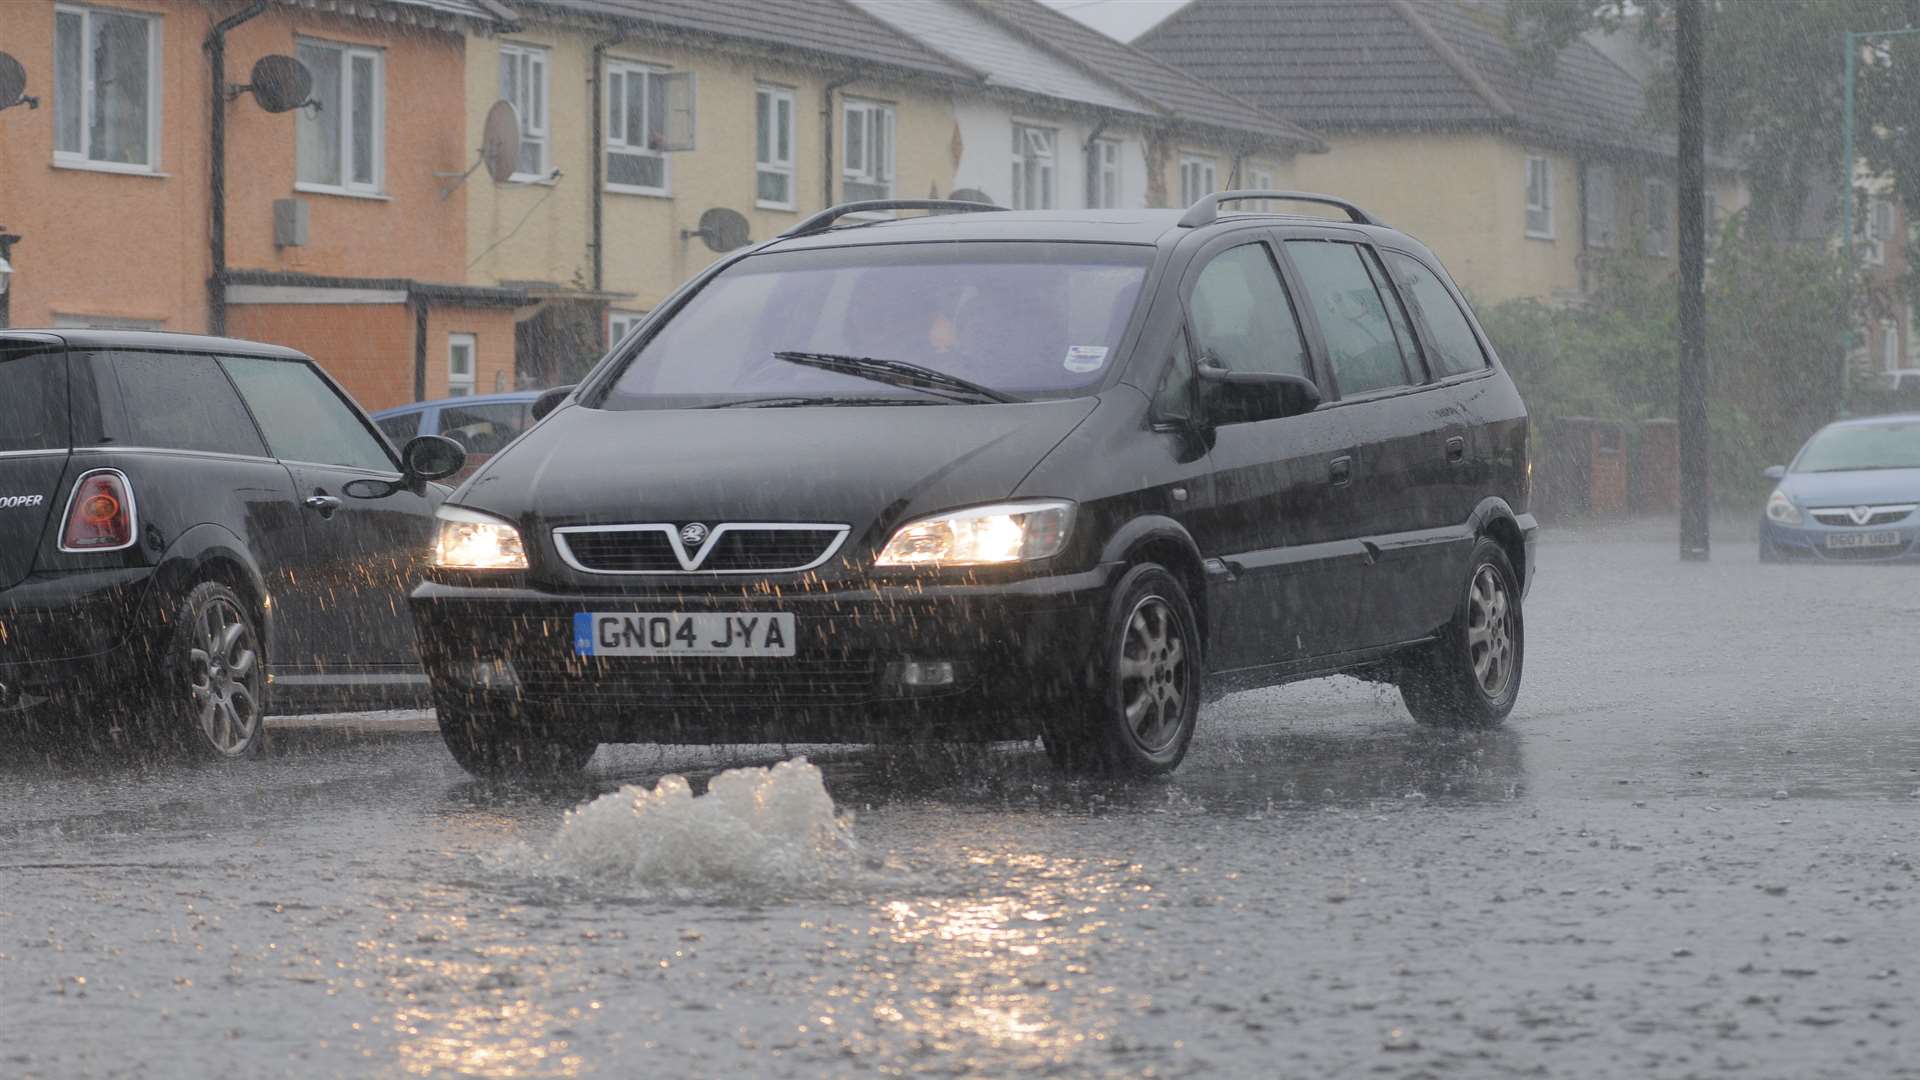 Kent faces torrential rain